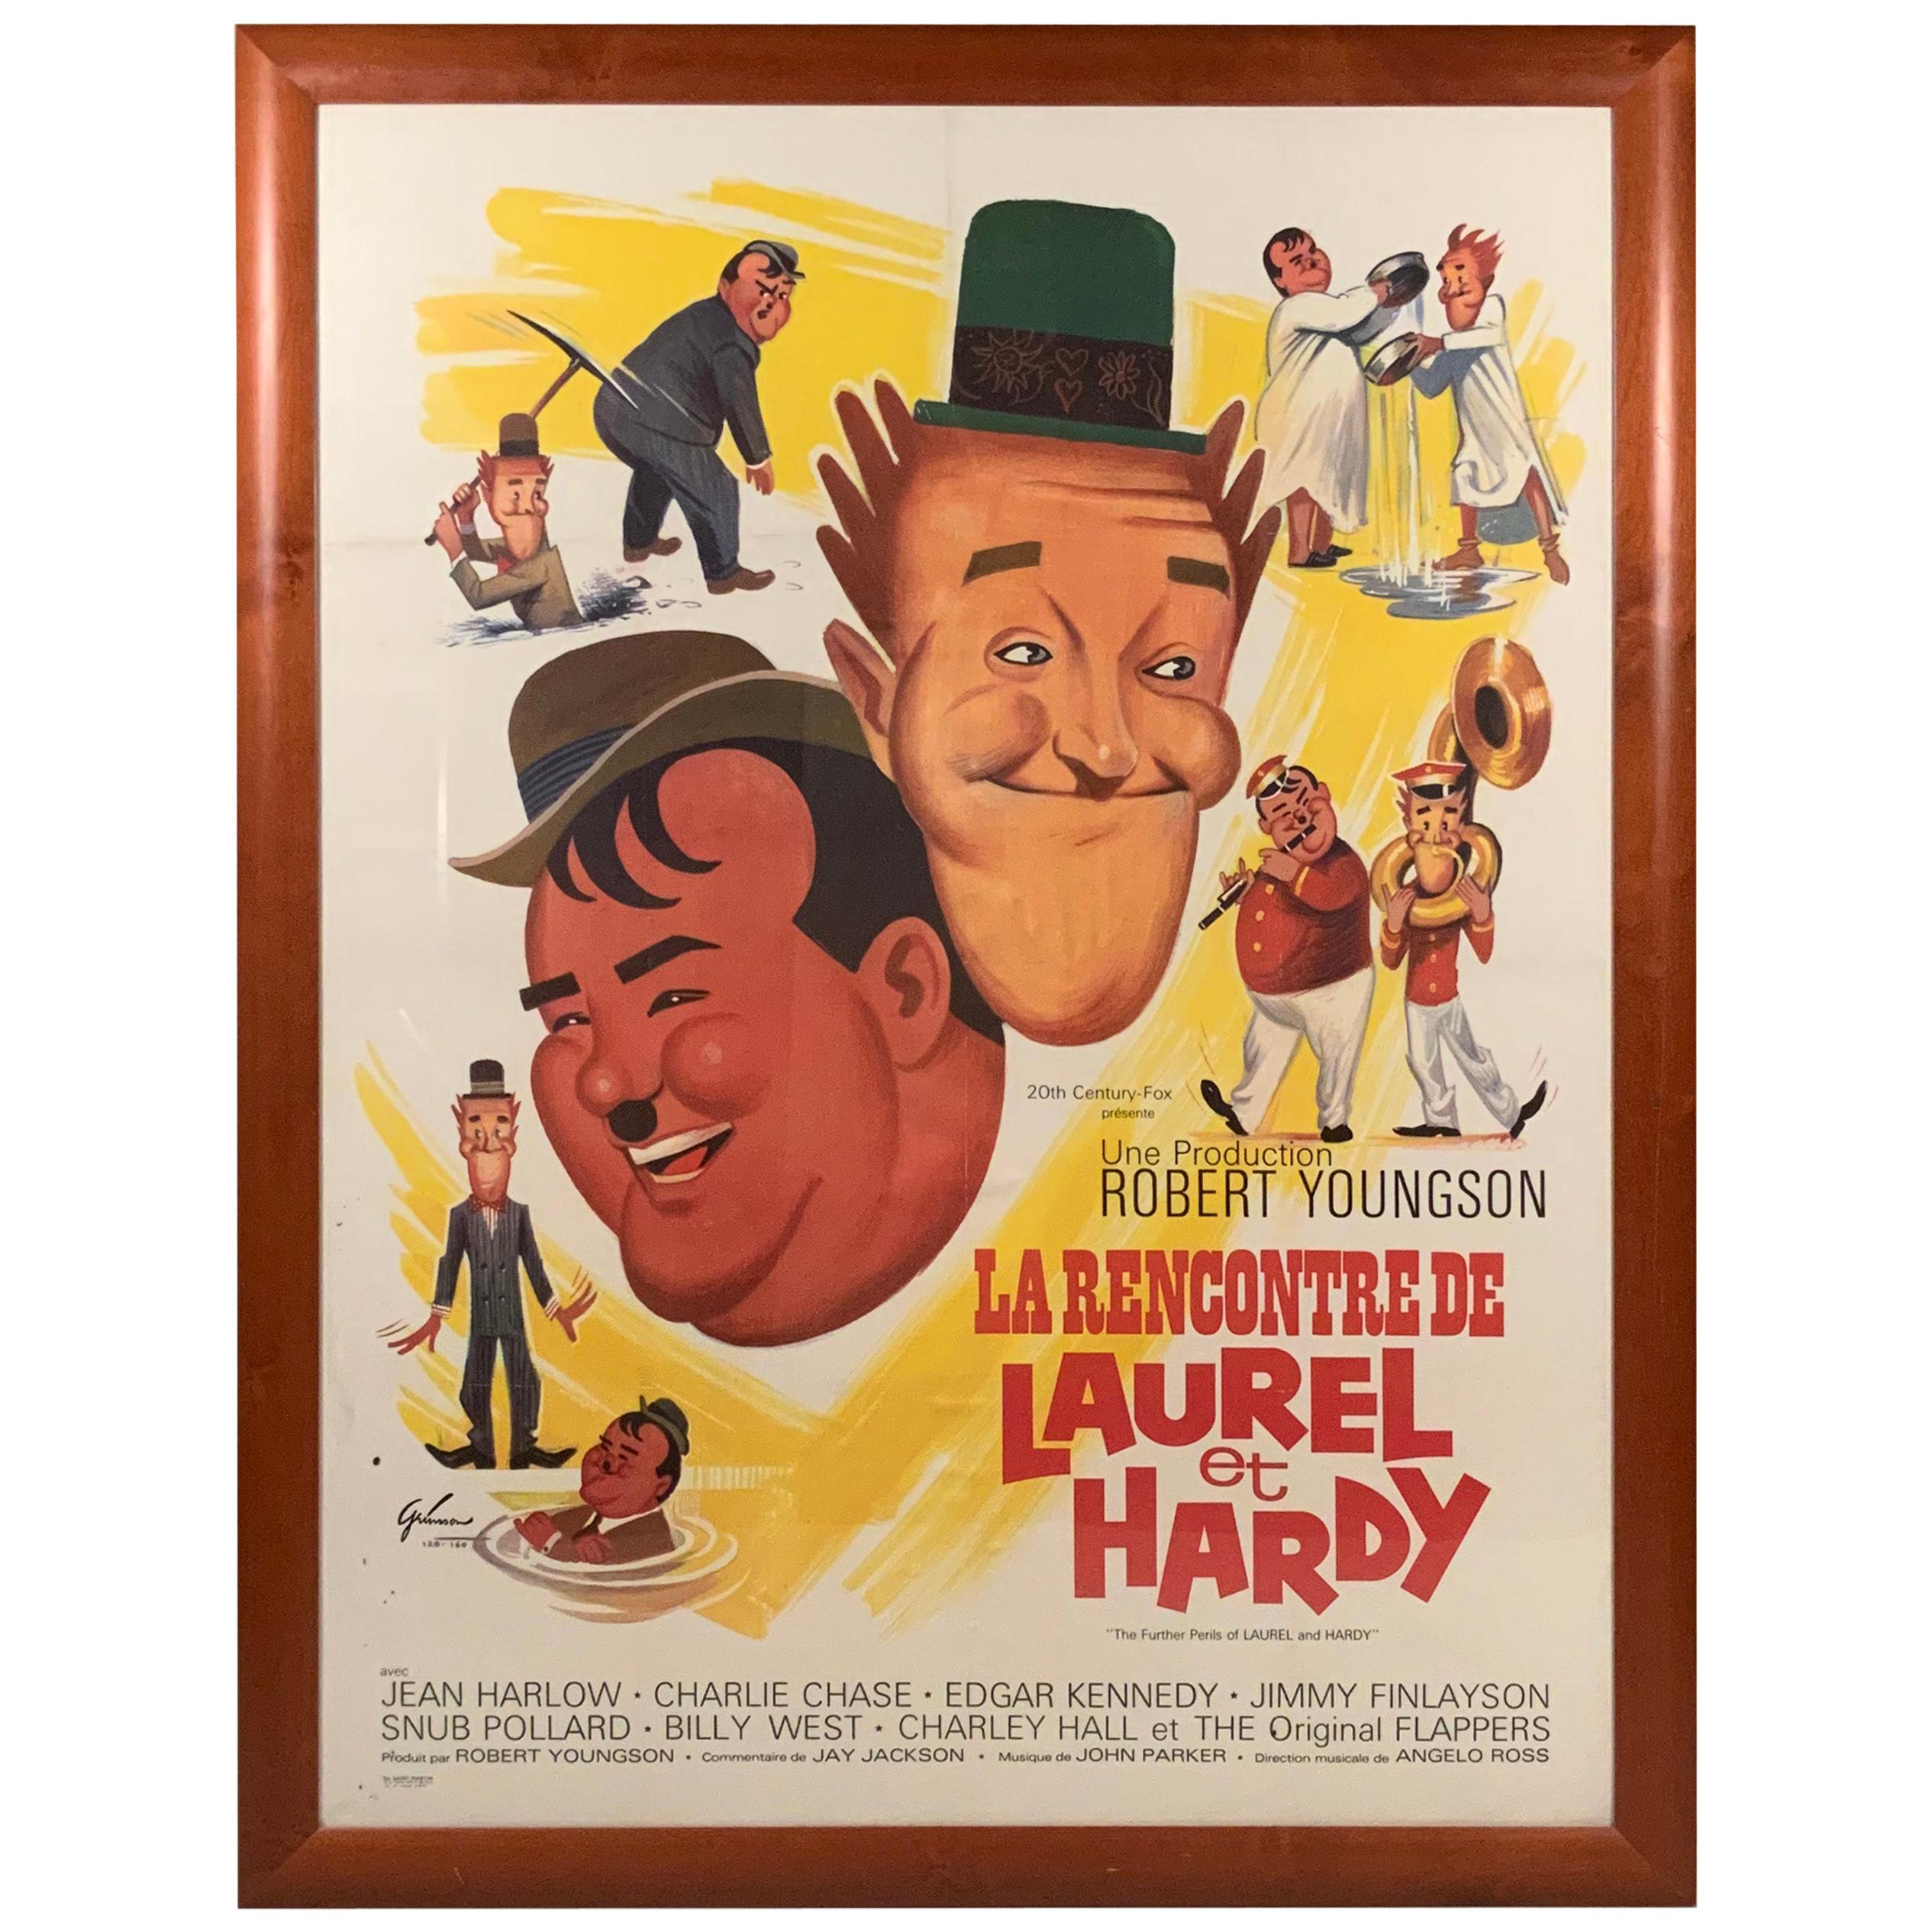 LAUREL & HARDY Set of 4 Retro Movie Poster Fridge Magnets Set 1 